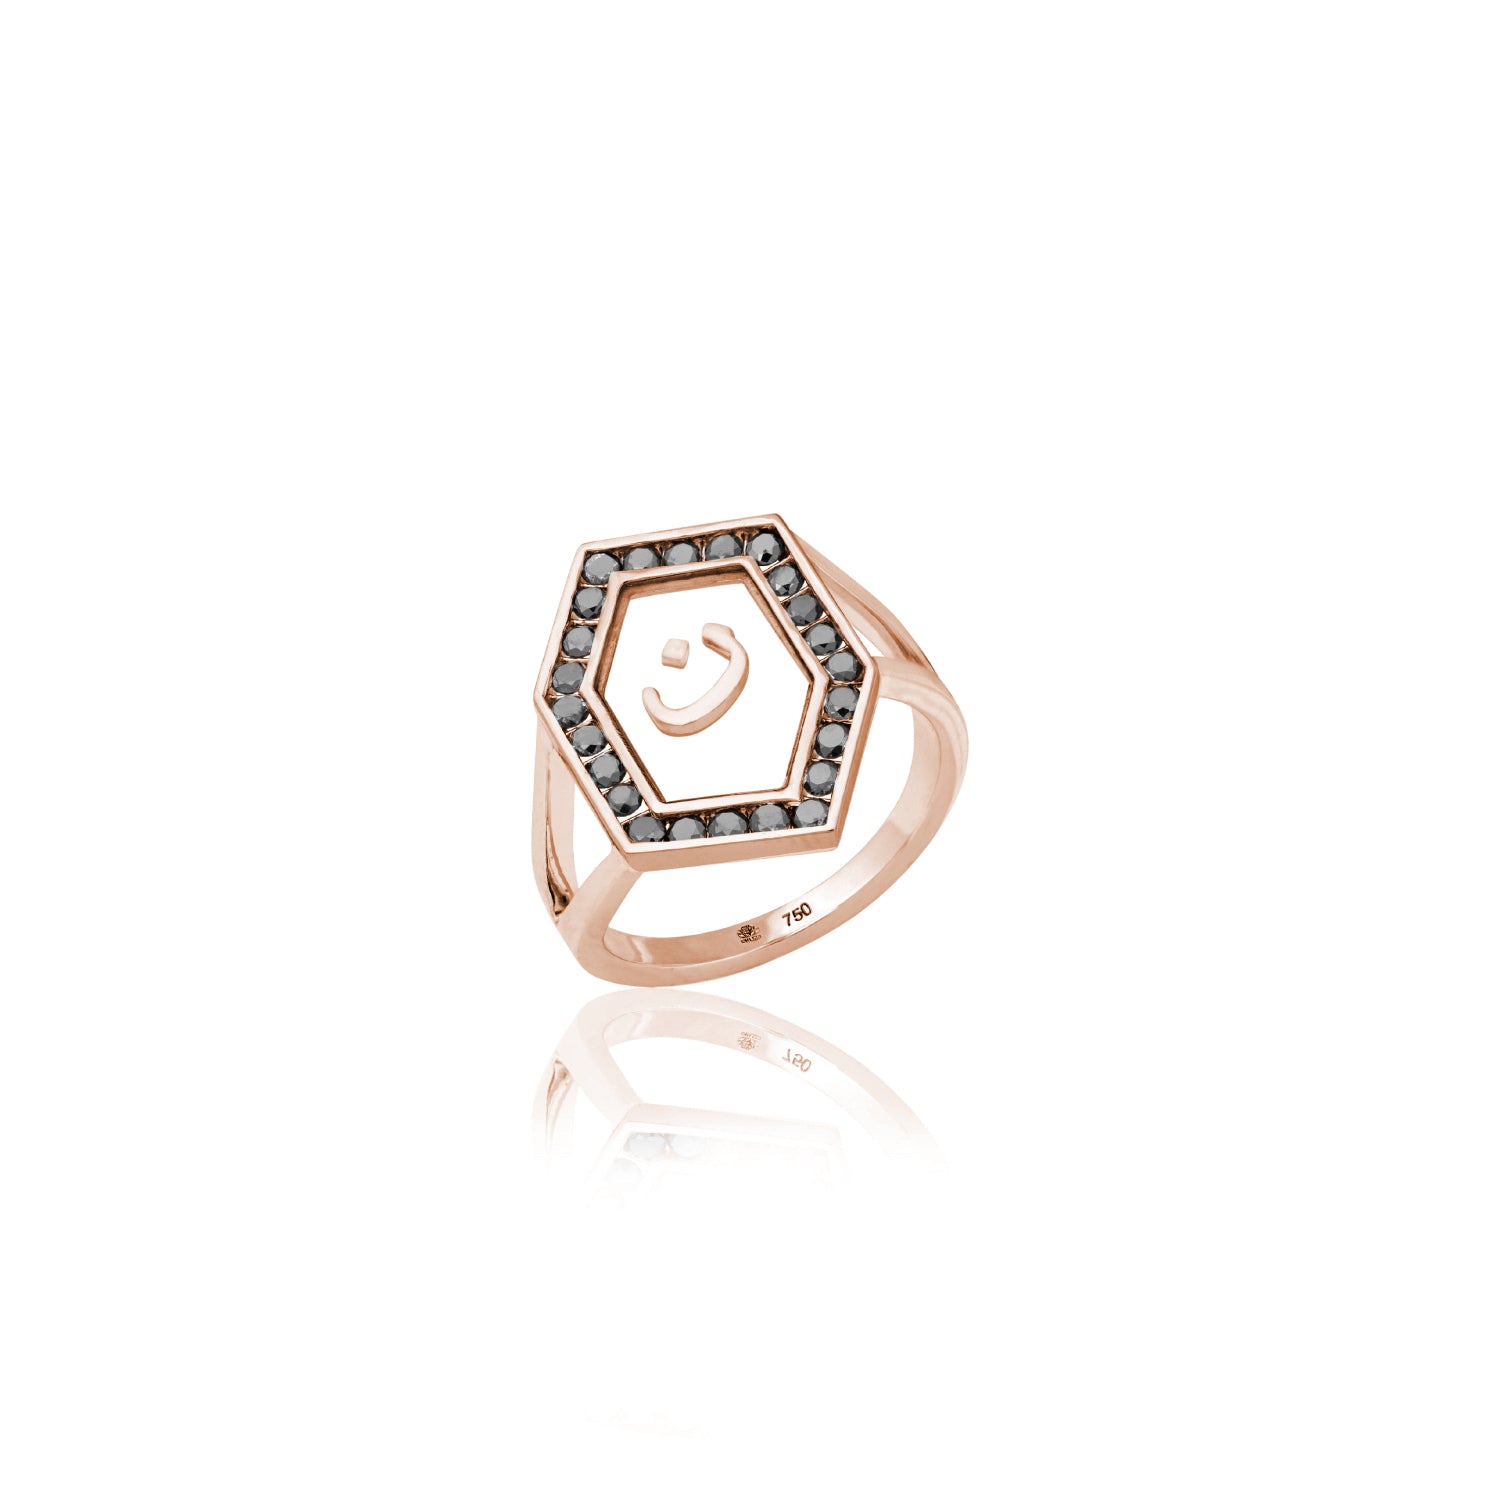 Qamoos 1.0 Letter ن Black Diamond Ring in Rose Gold